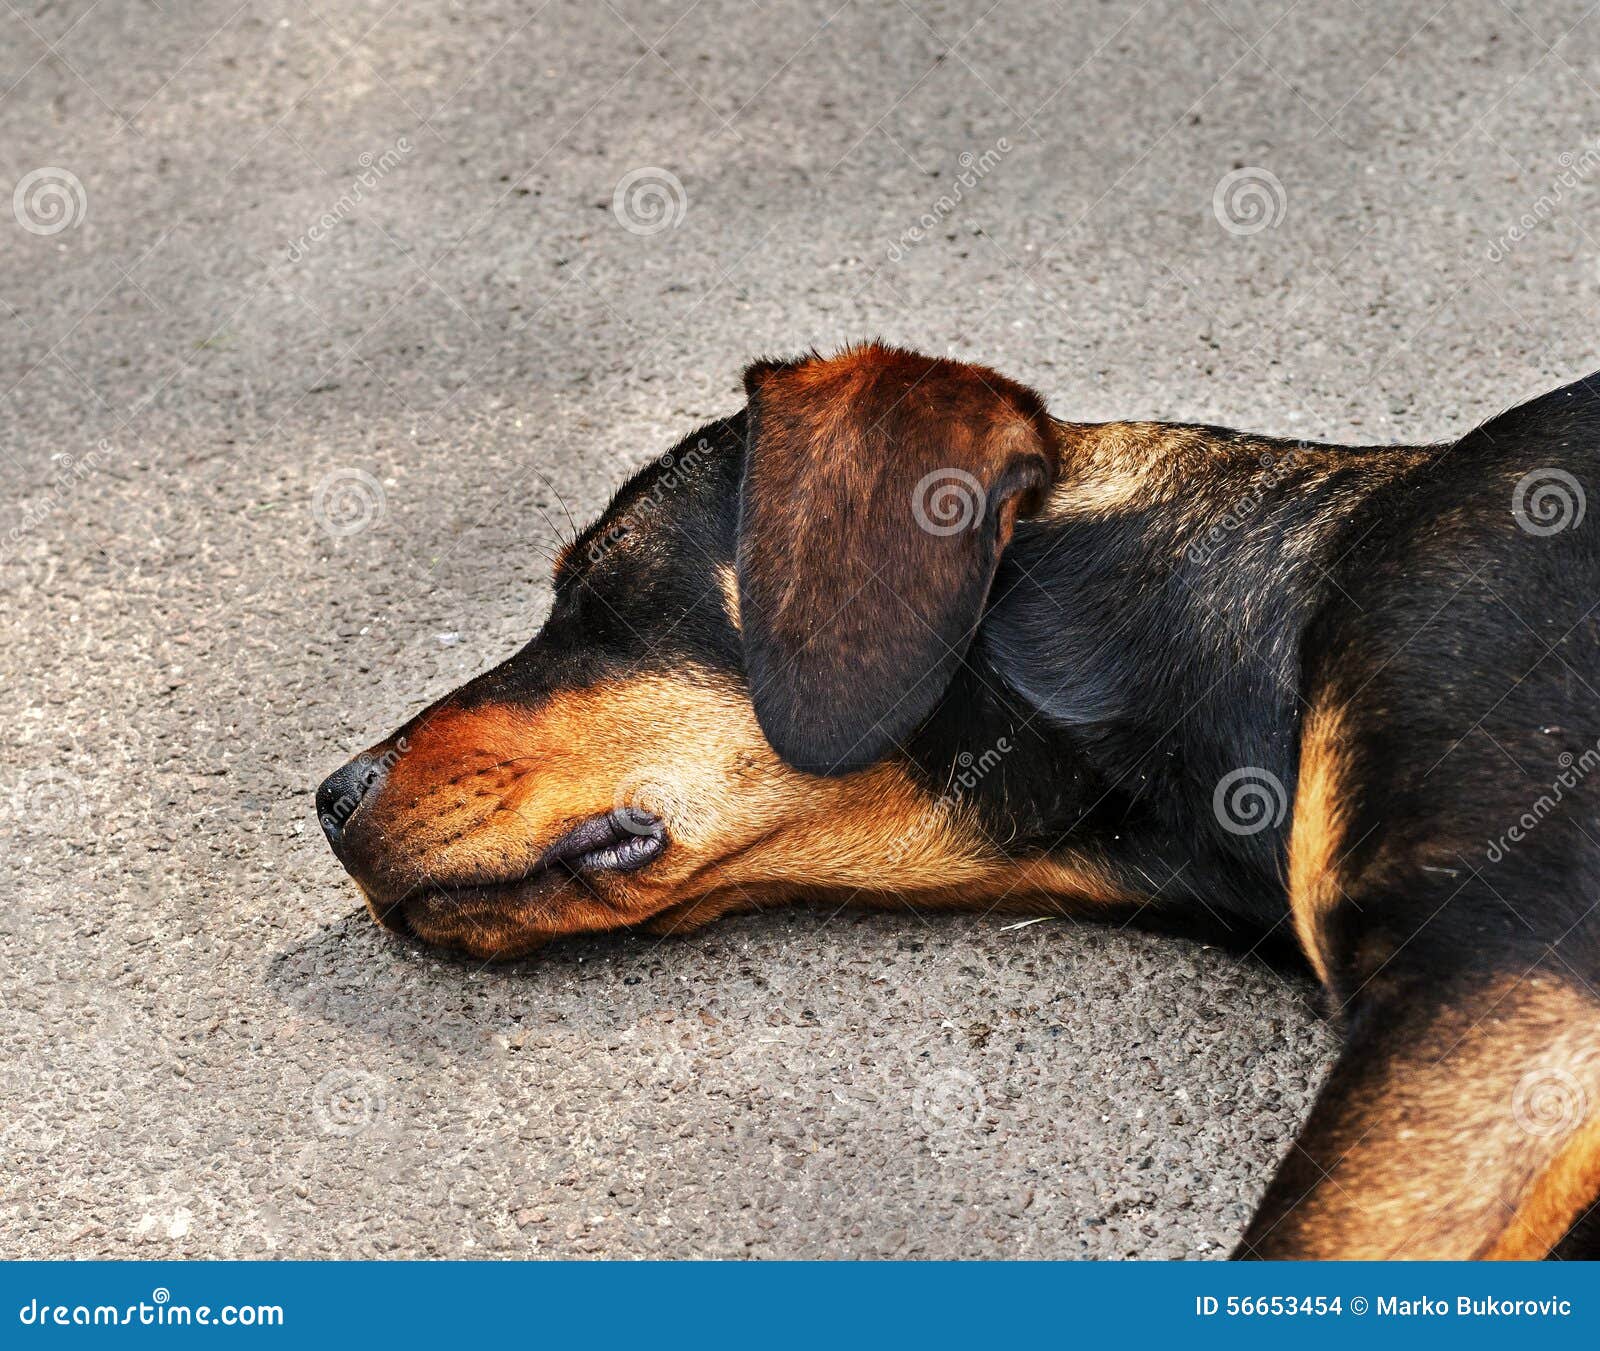 drifter yellow and black dog sleeping on asphalt